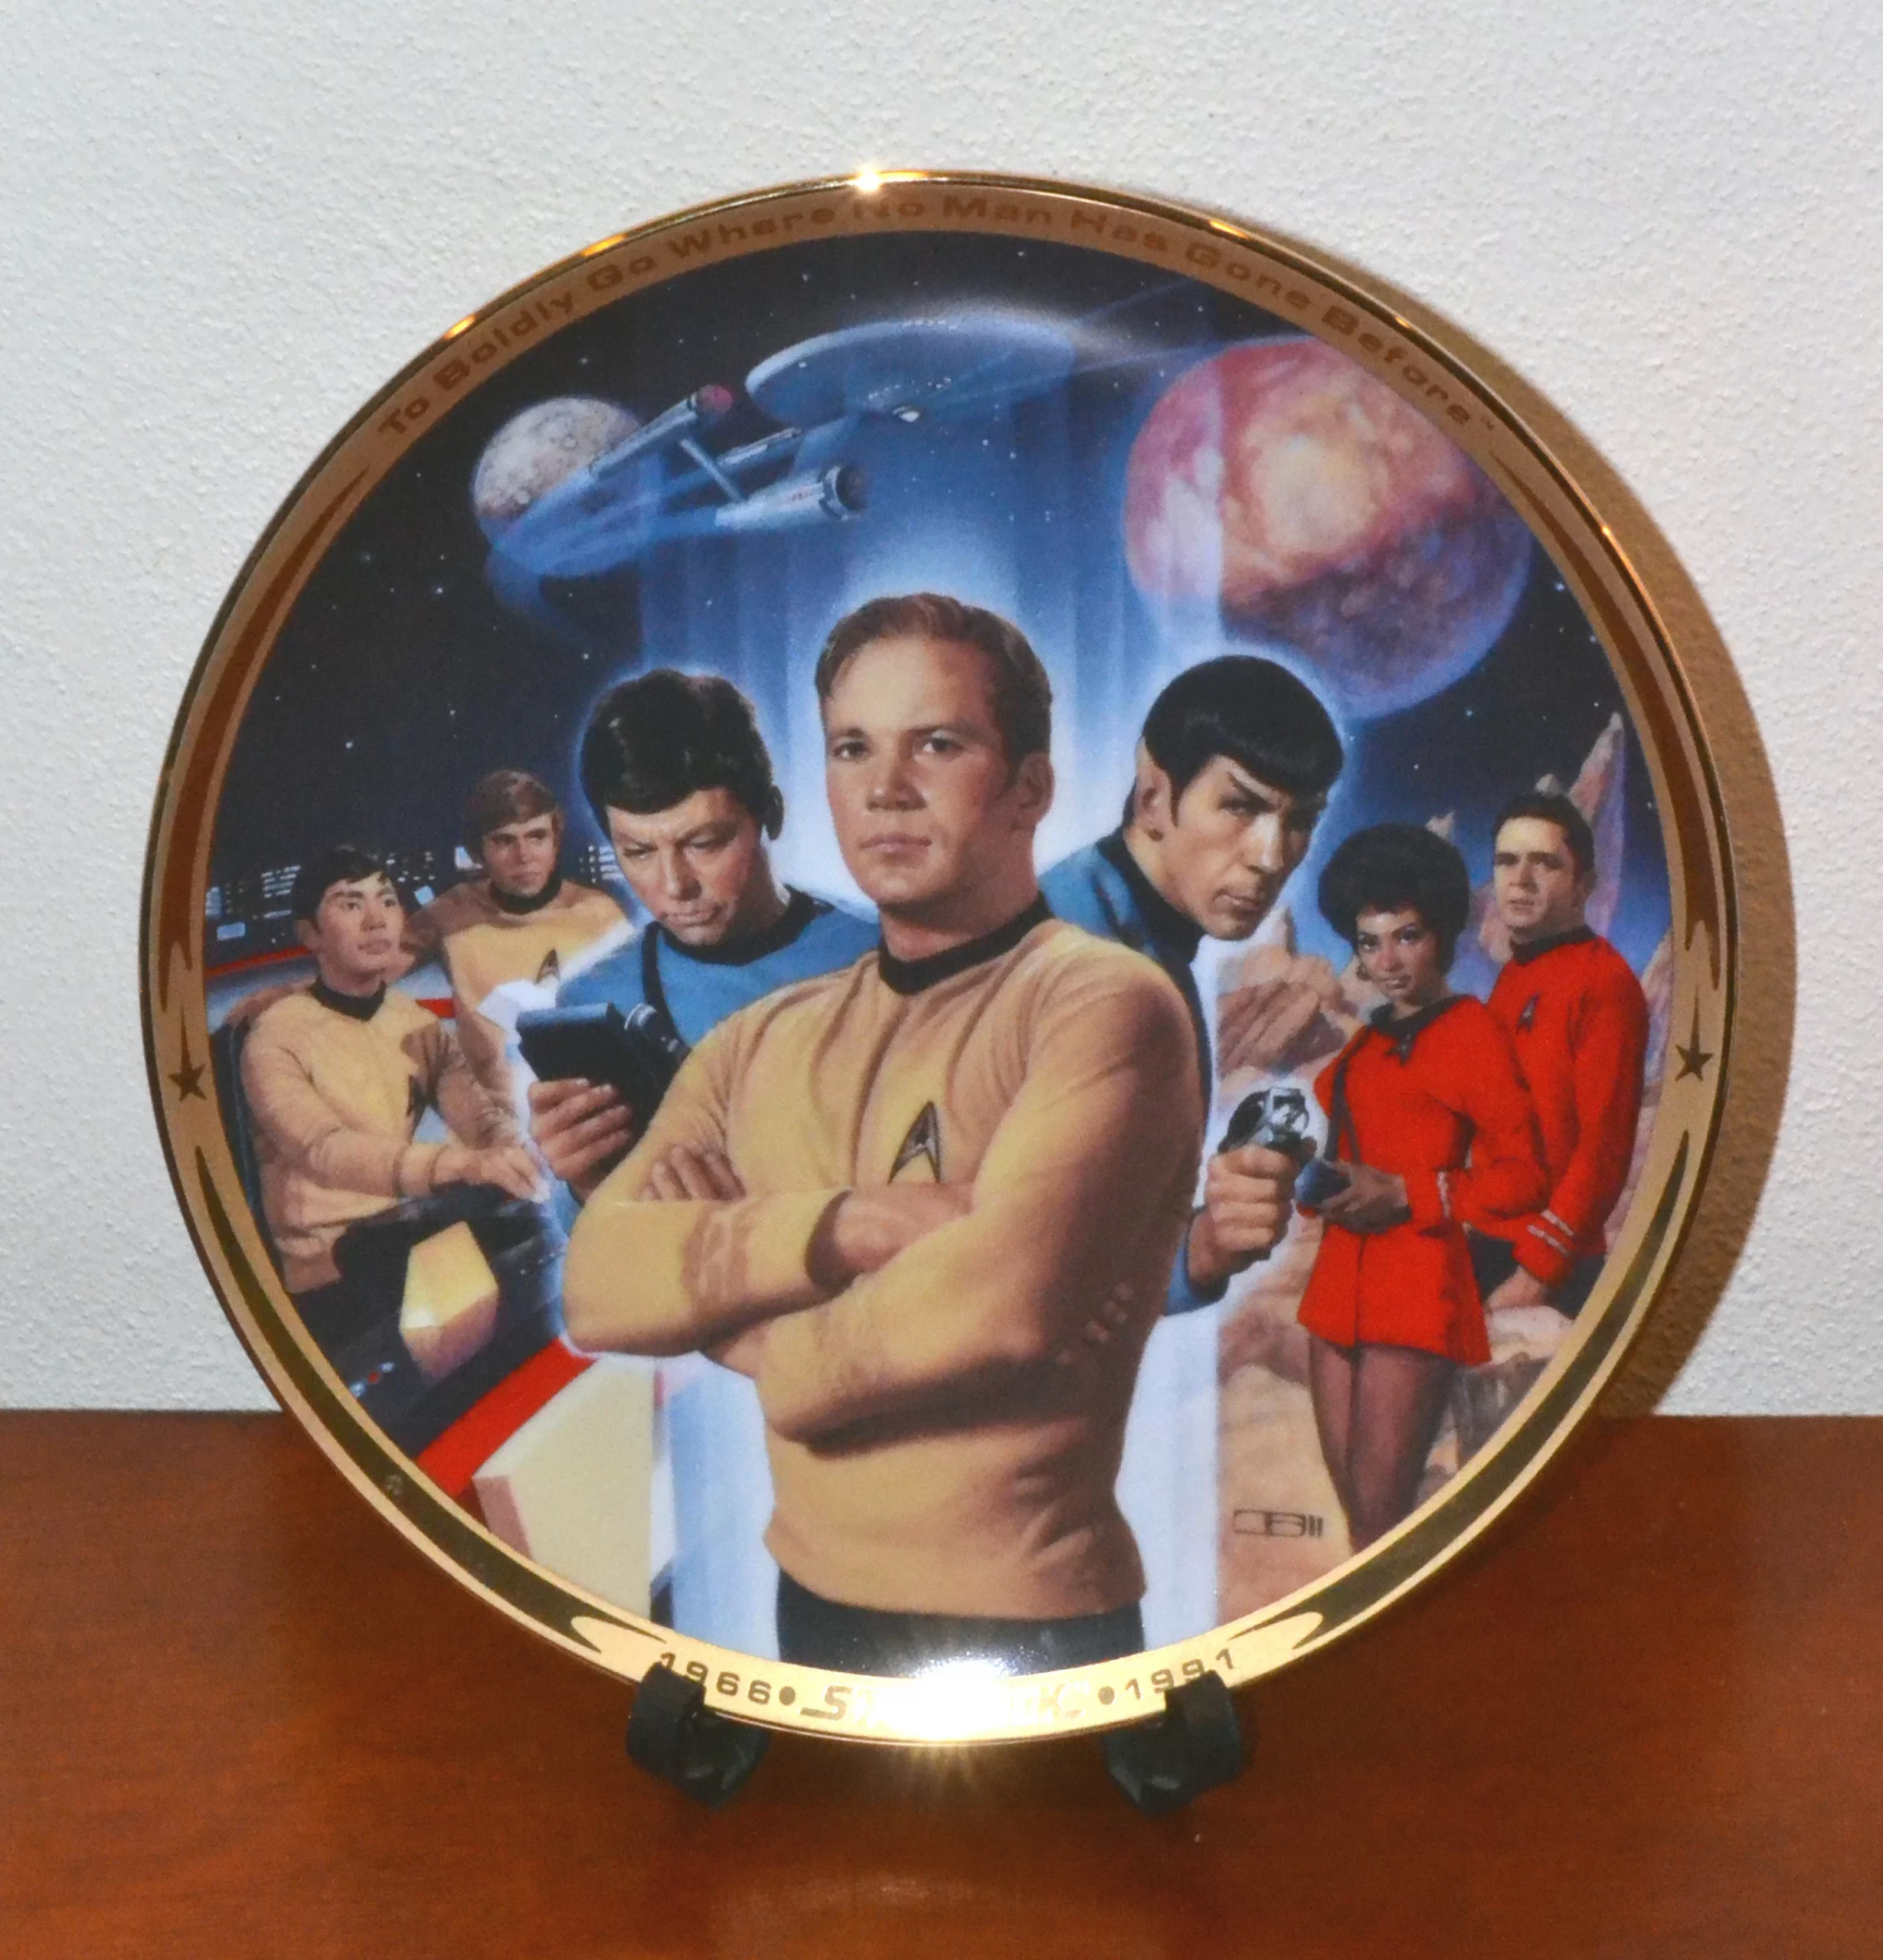 Star Trek collector’s plates